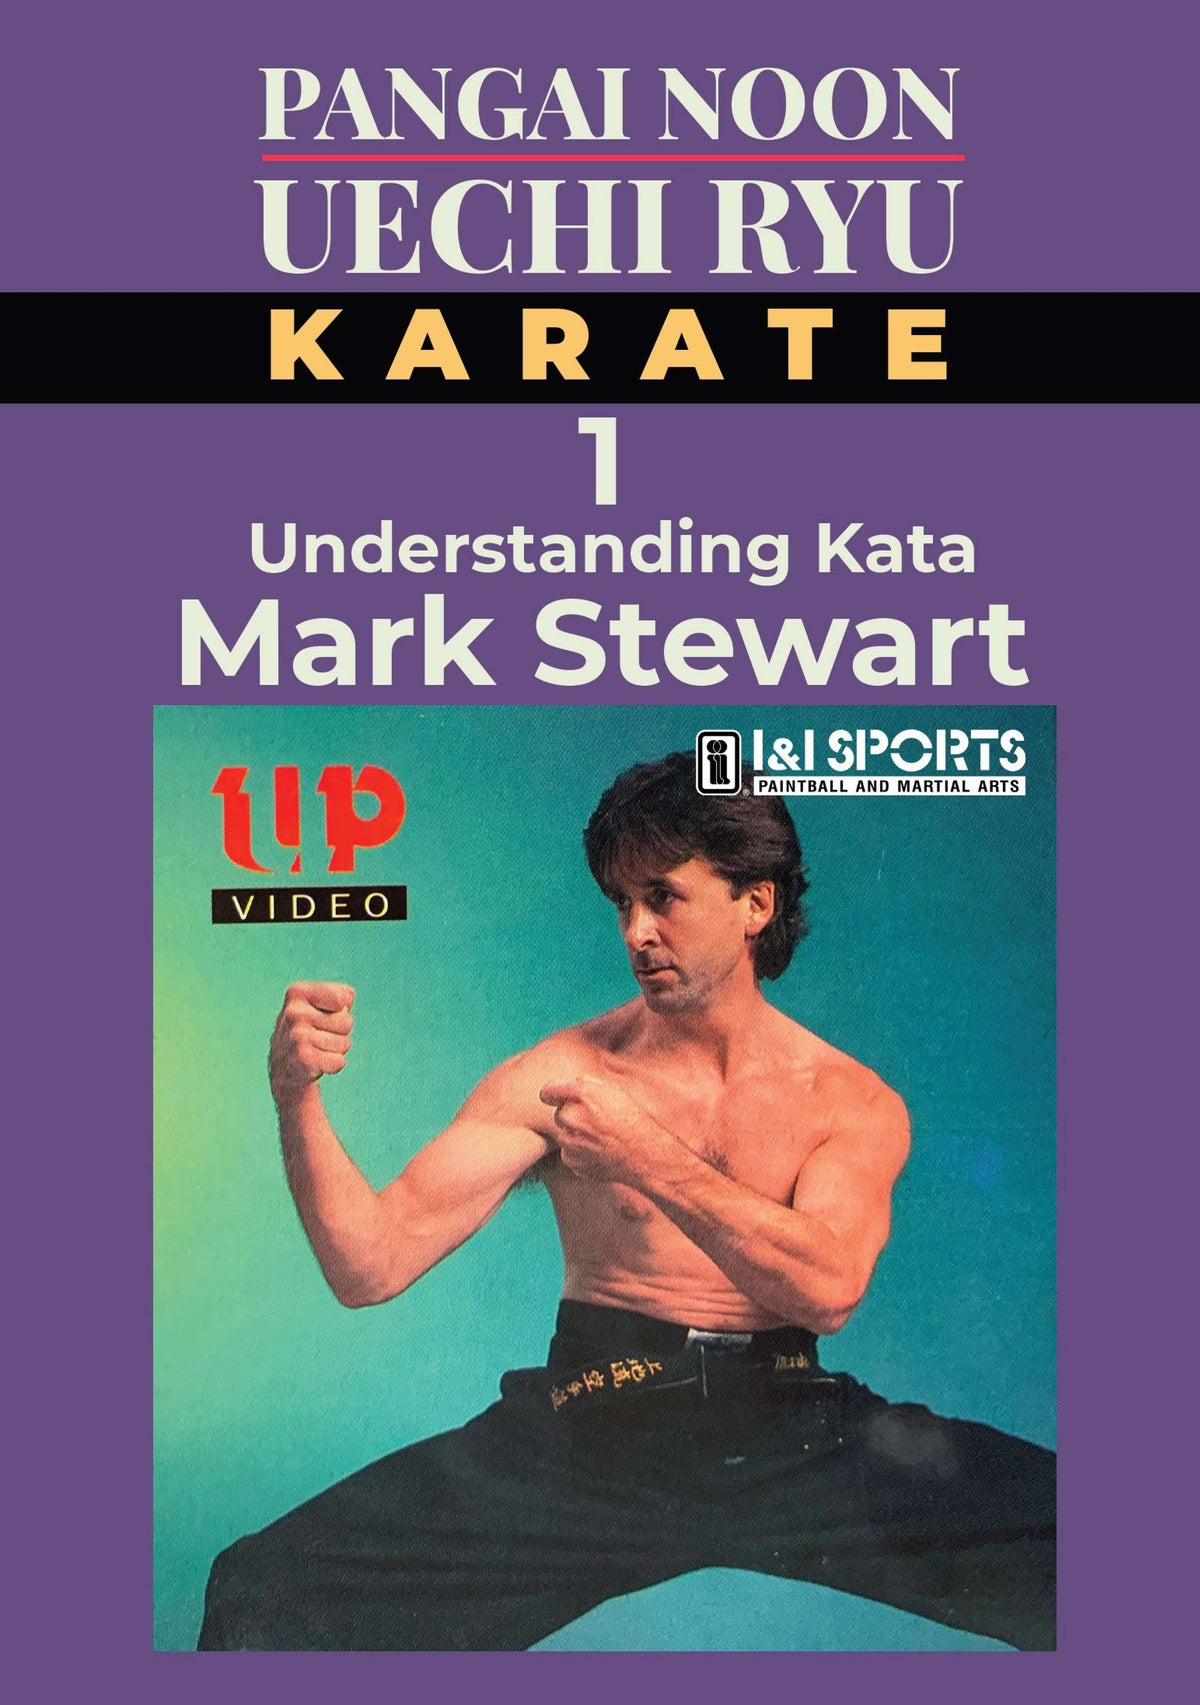 Pangai Noon Uechi Ryu Karate #1 Understanding Kata DVD Mark Stewart